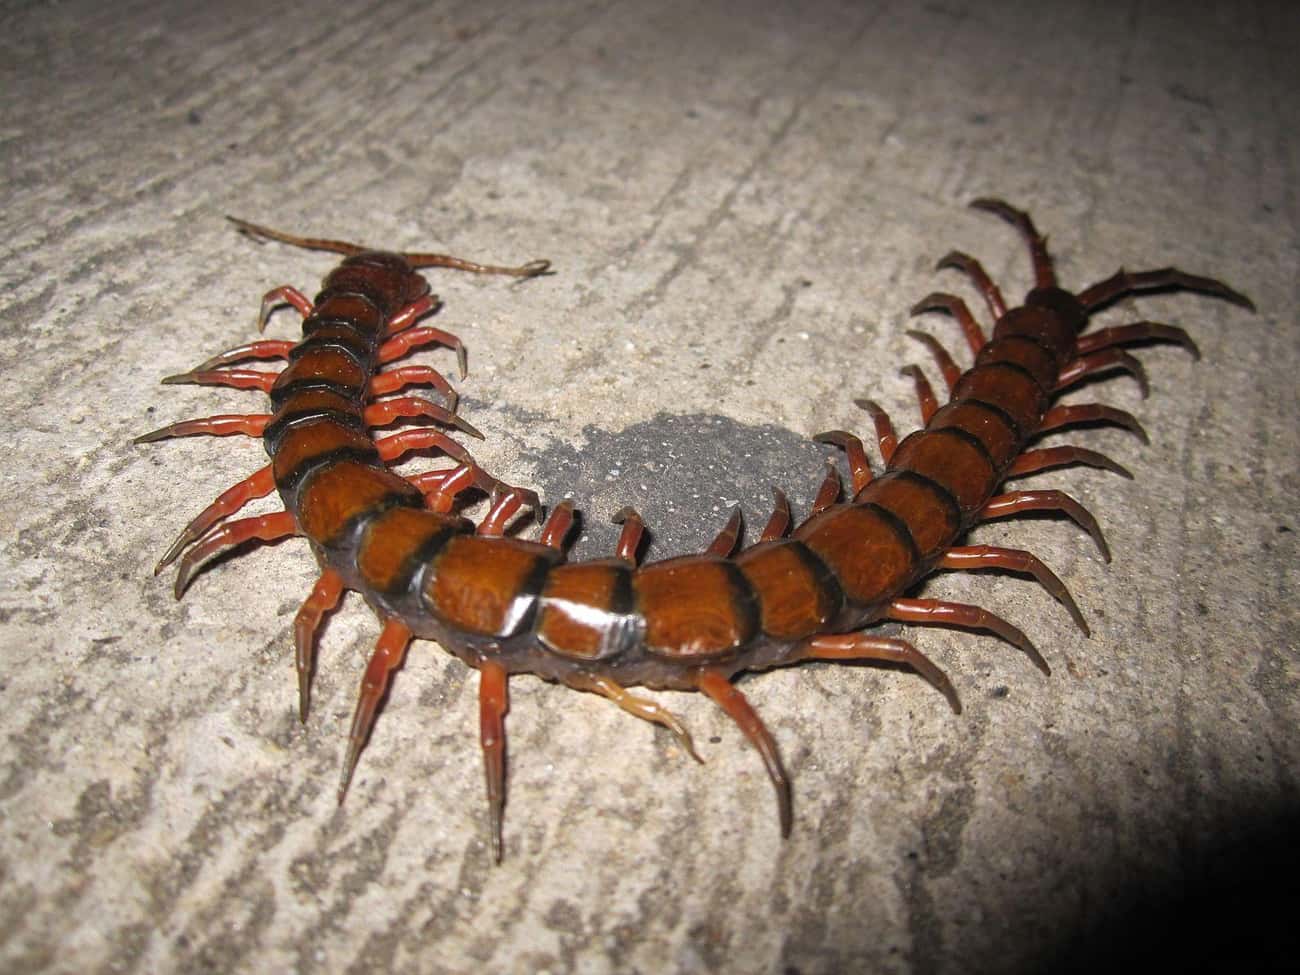 Amazonian Giant Centipedes